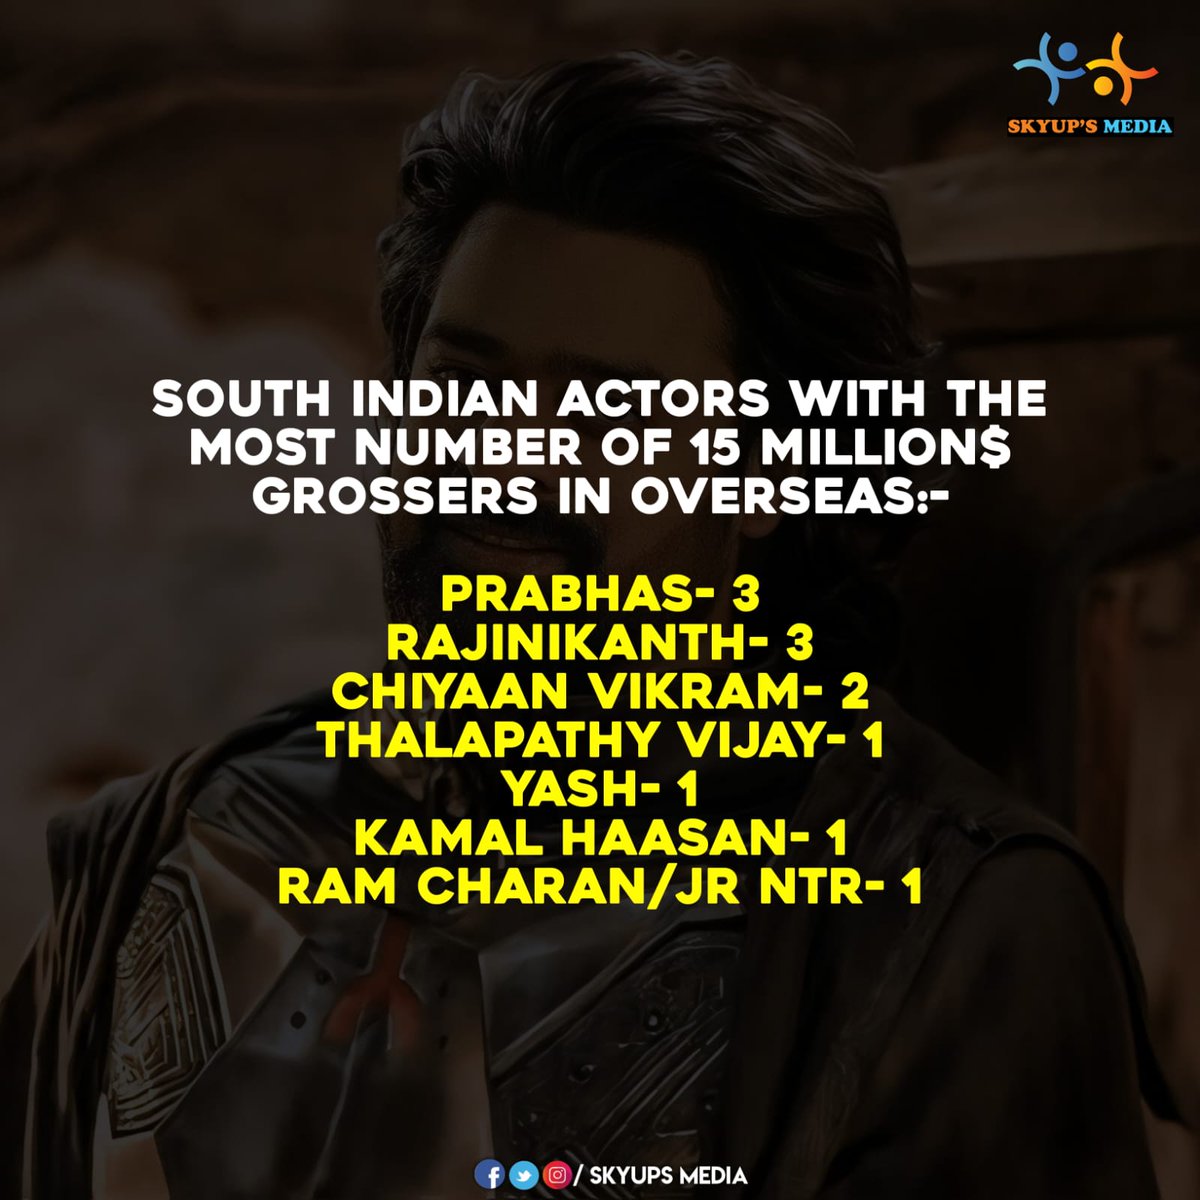 South Indian actors with the most number of 15M grossers overseas... #Prabhas #Rajinikanth #ChiyaanVikram #ThalapathyVijay #Yash #KamalHaasan #JrNtr #RamCharan